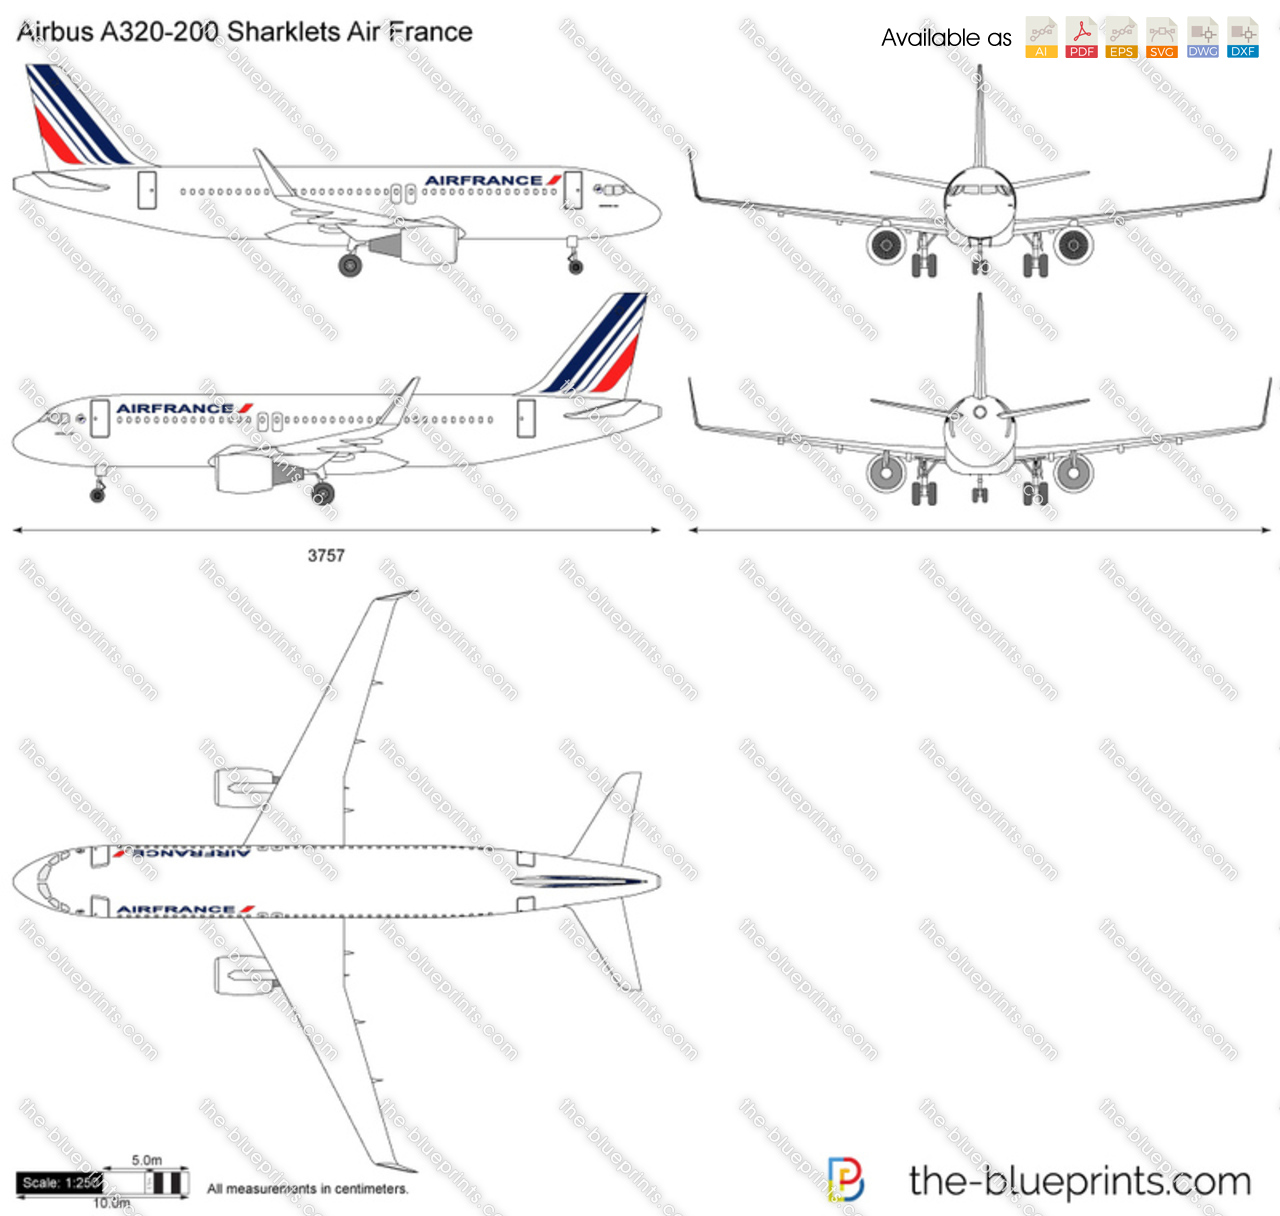 Airbus A320-200 Sharklets Air France